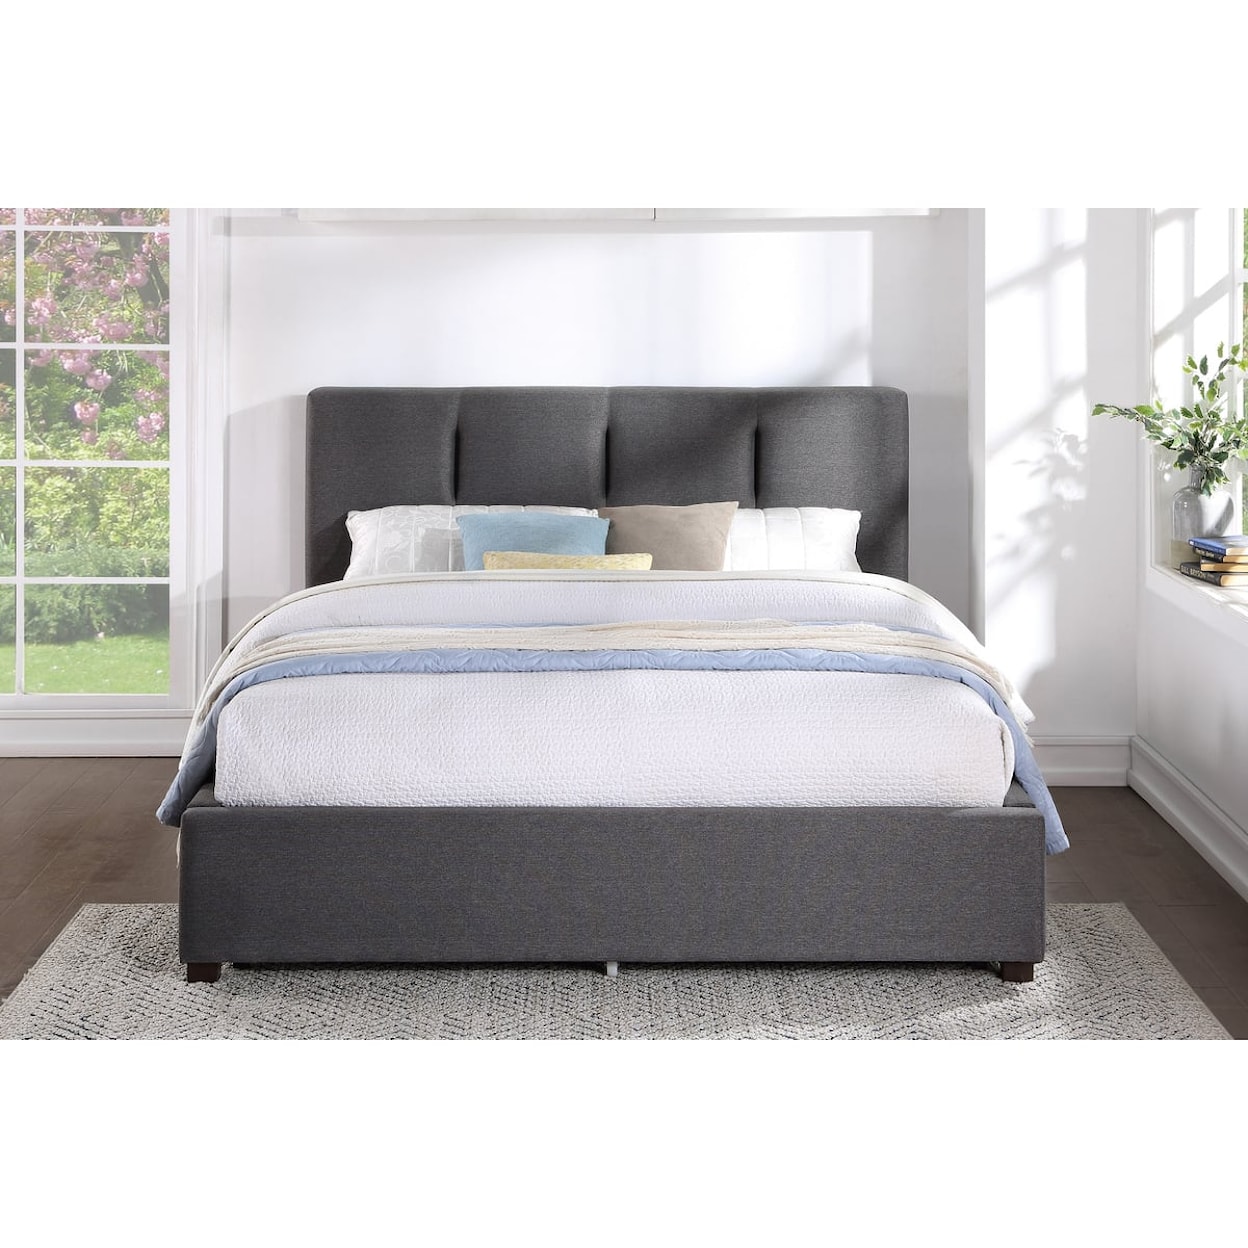 Homelegance Furniture Aitana California King Bed with Footboard Storage